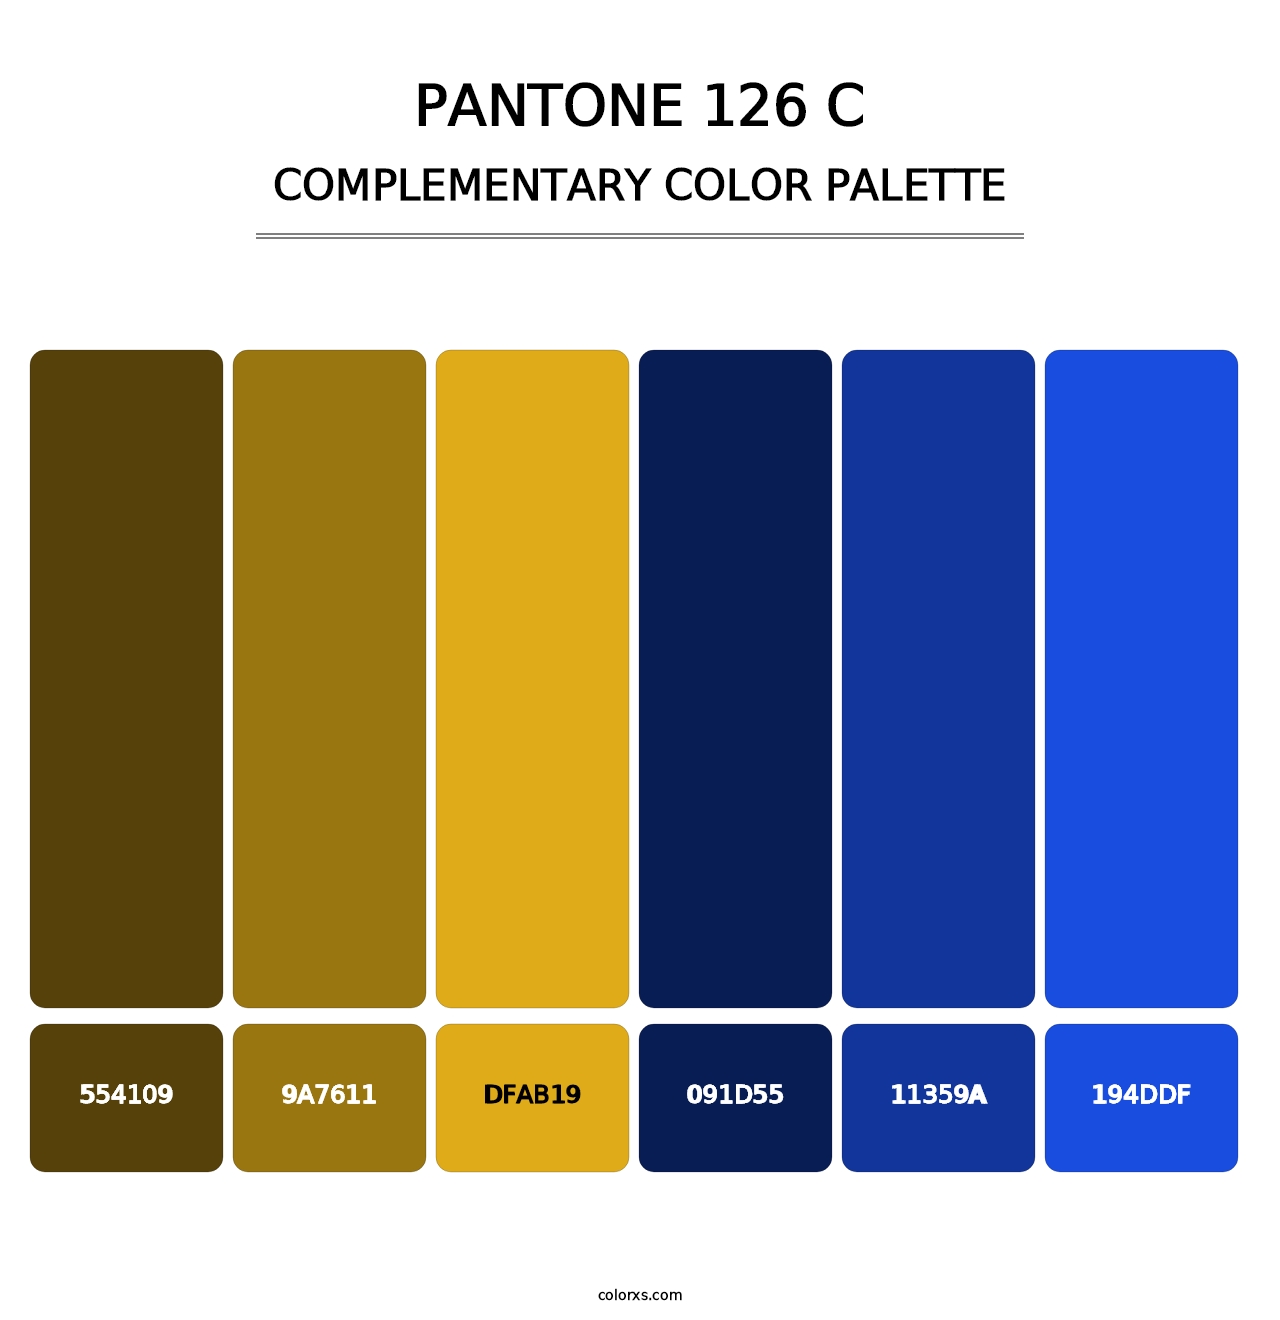 PANTONE 126 C - Complementary Color Palette